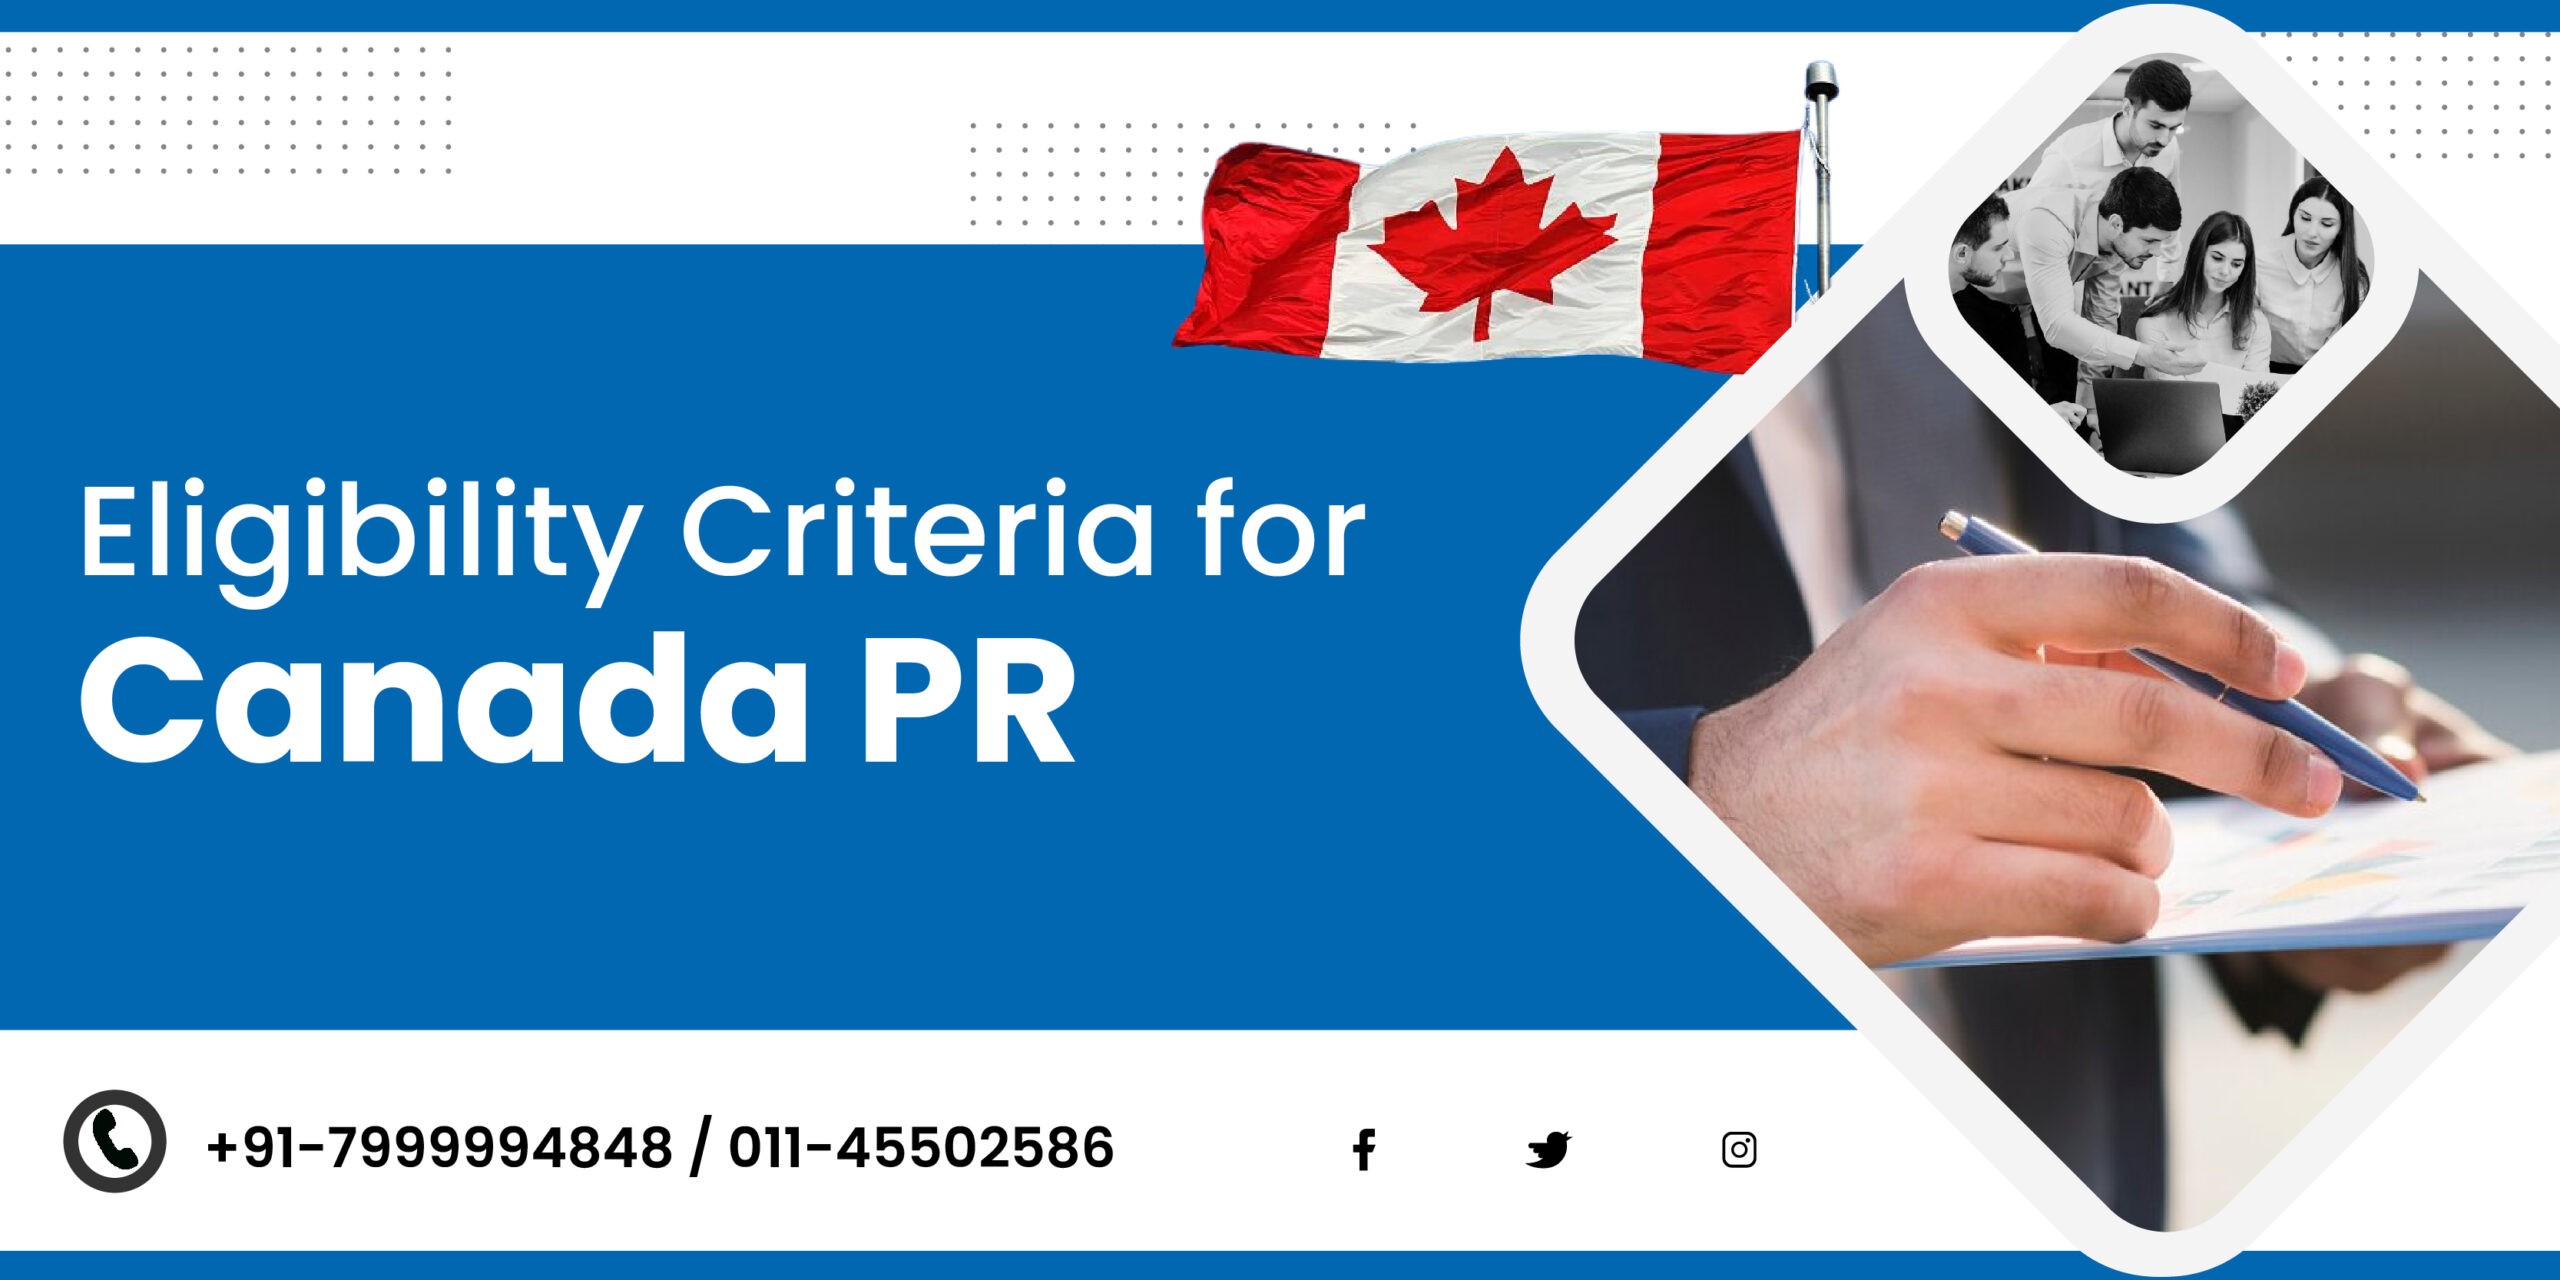 Eligibility criteria for Canada PR